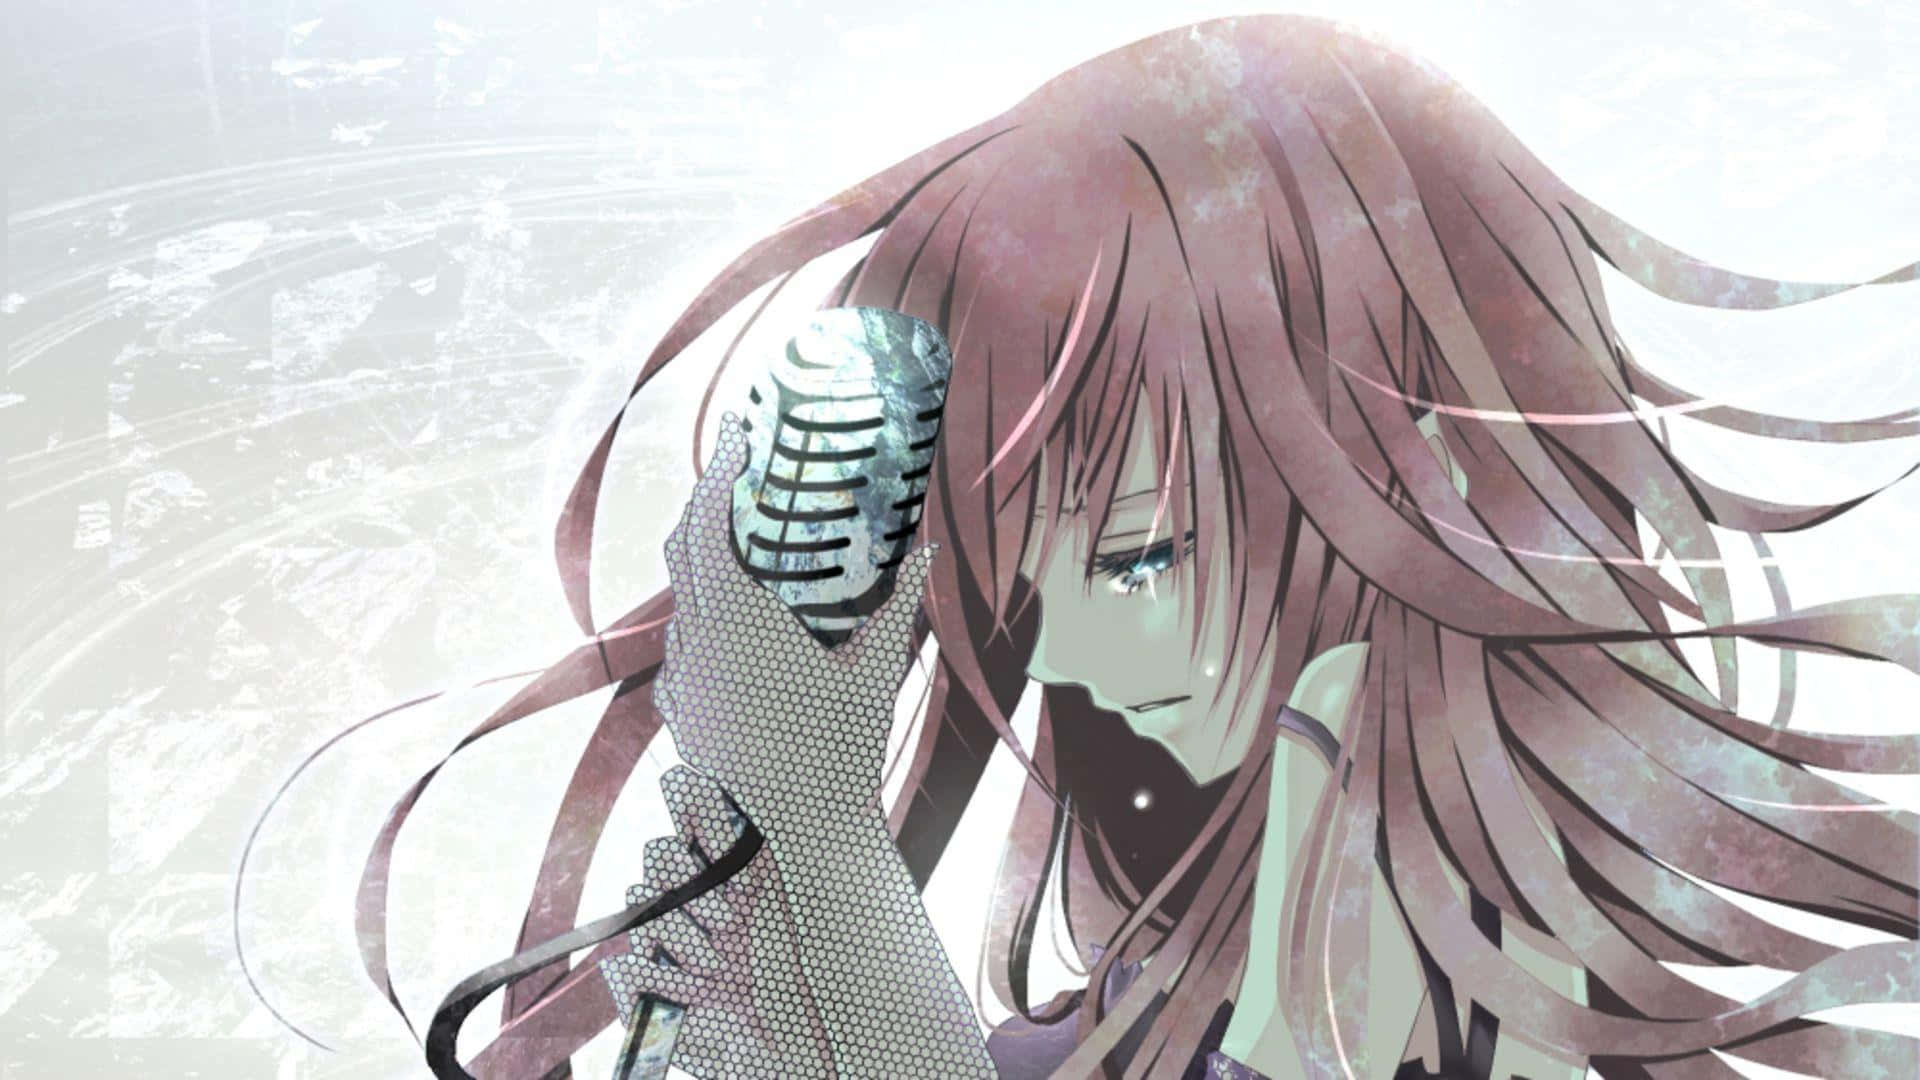 Sad Crying Anime Girl Holding A Microphone Wallpaper